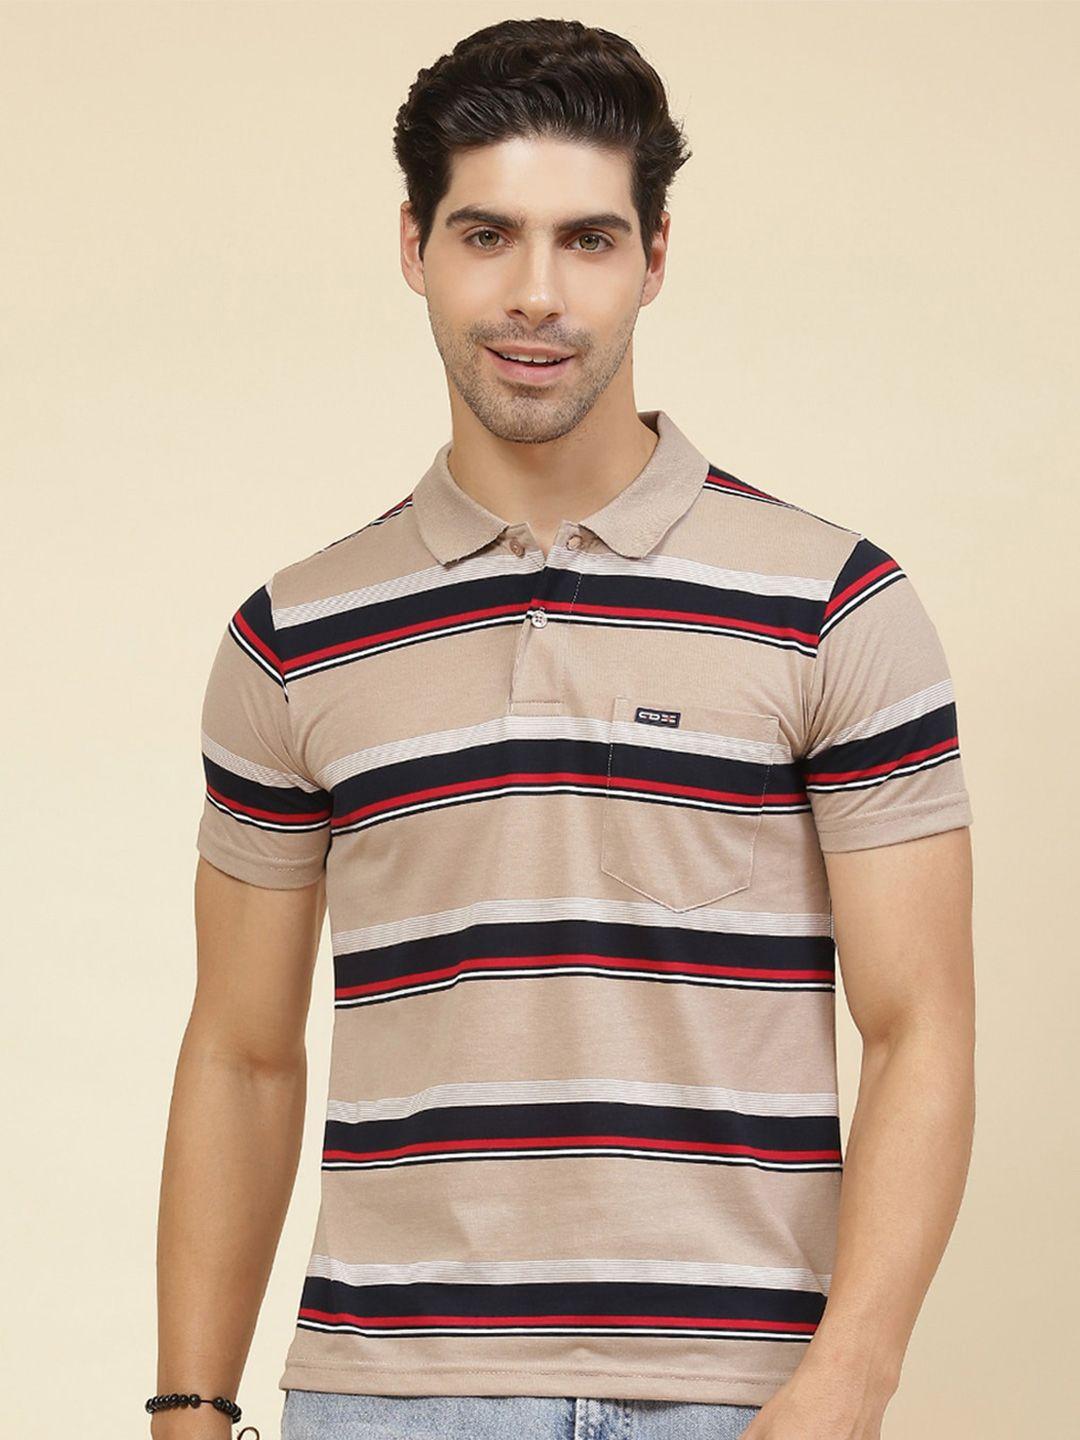 cloak & decker by monte carlo striped polo collar cotton t-shirt